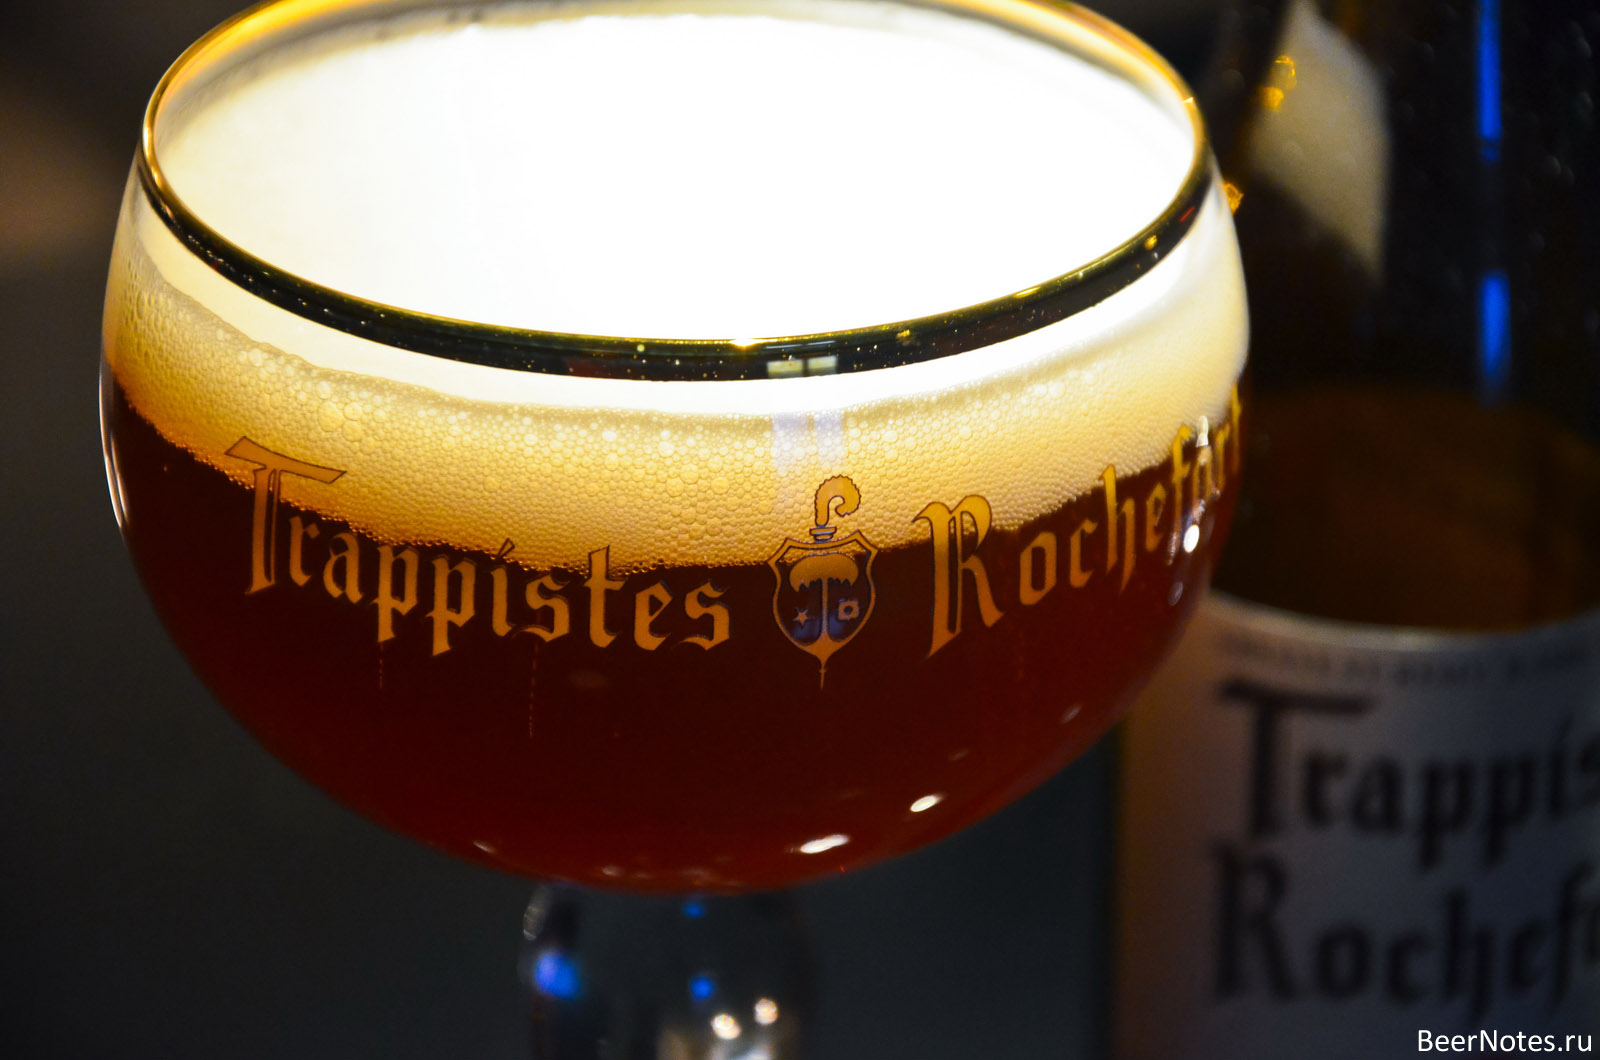 Trappistes Rochefort 6-3